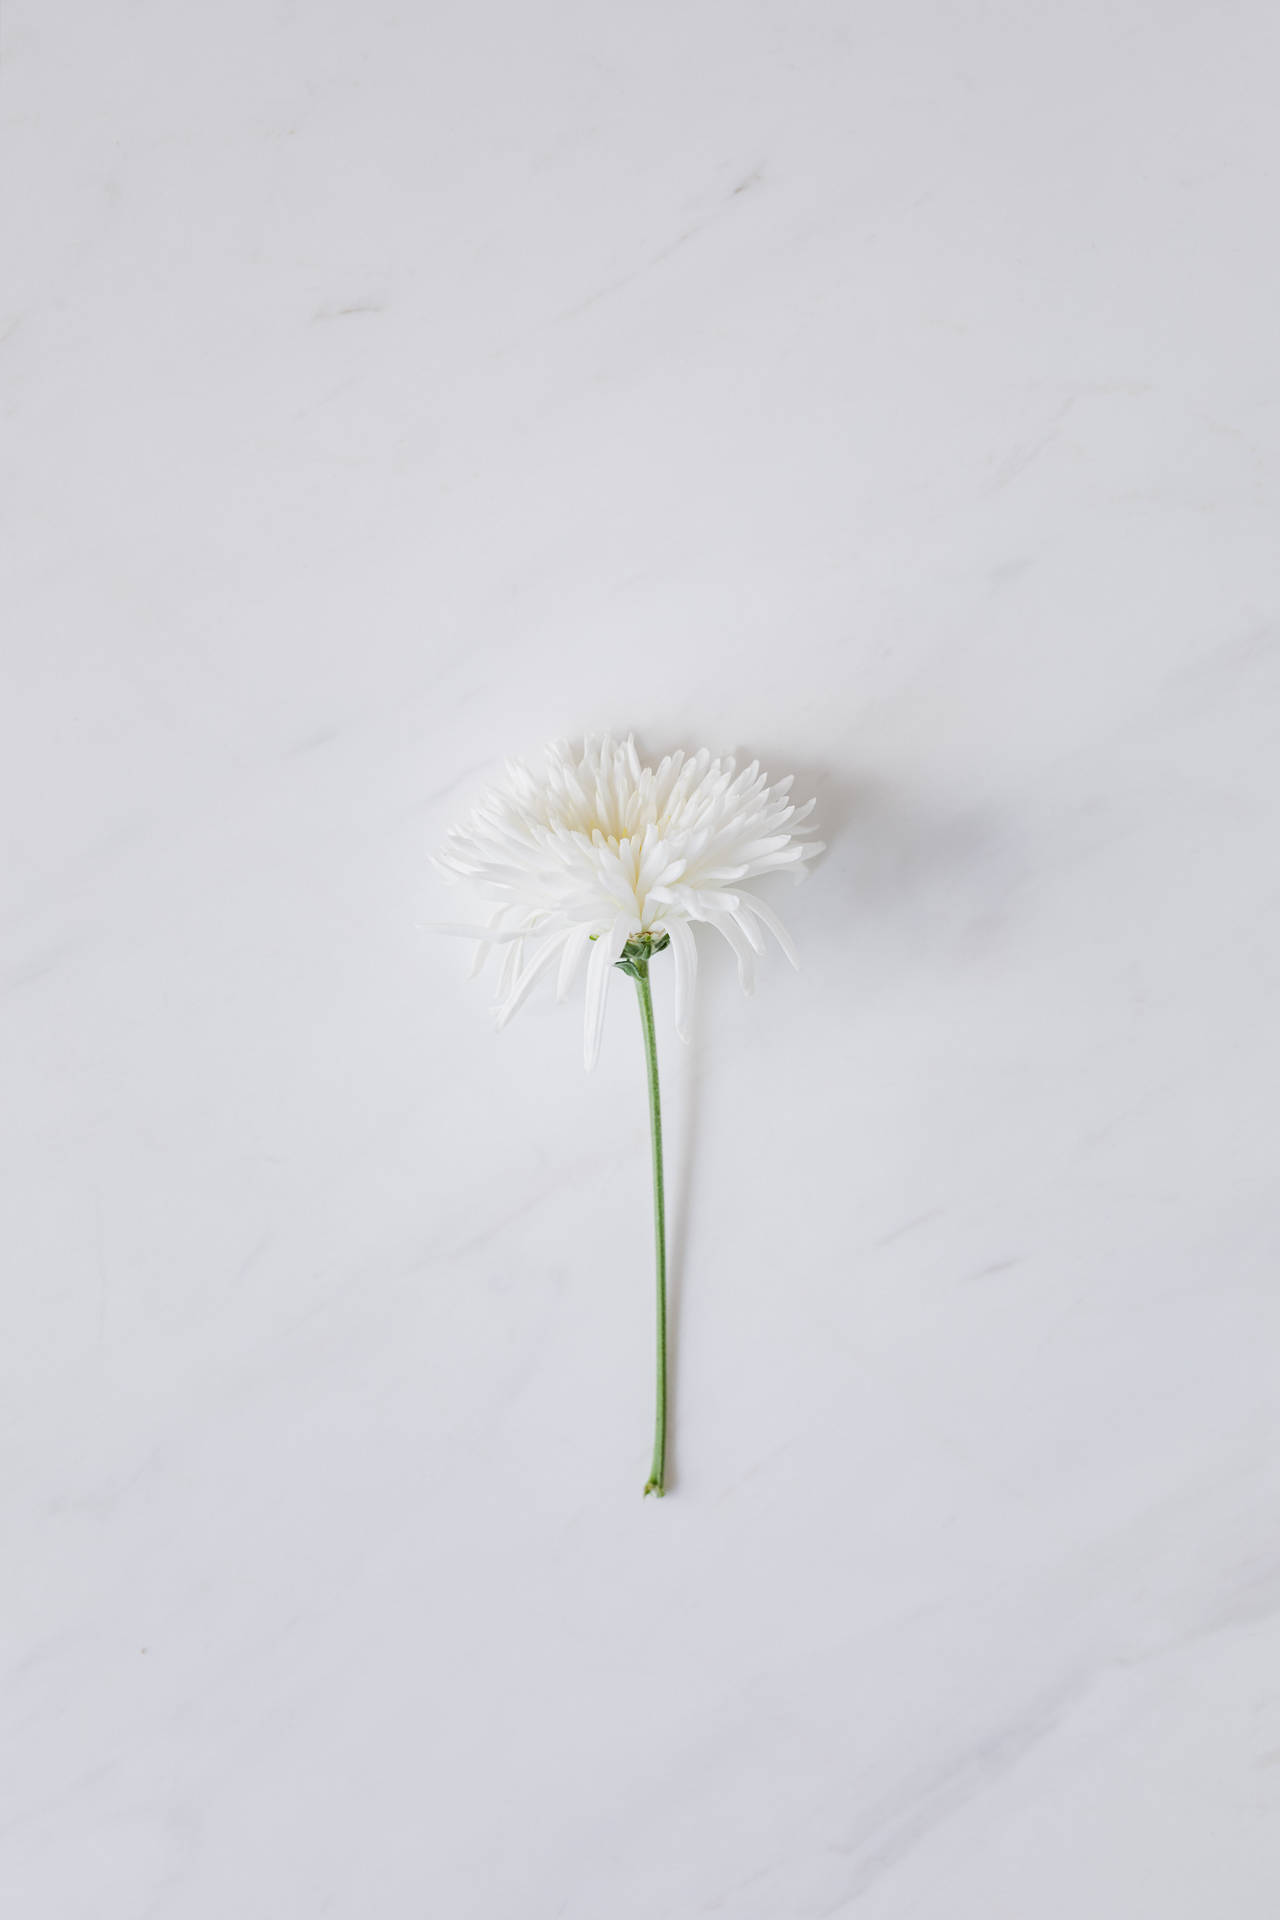 White Flower On White Background